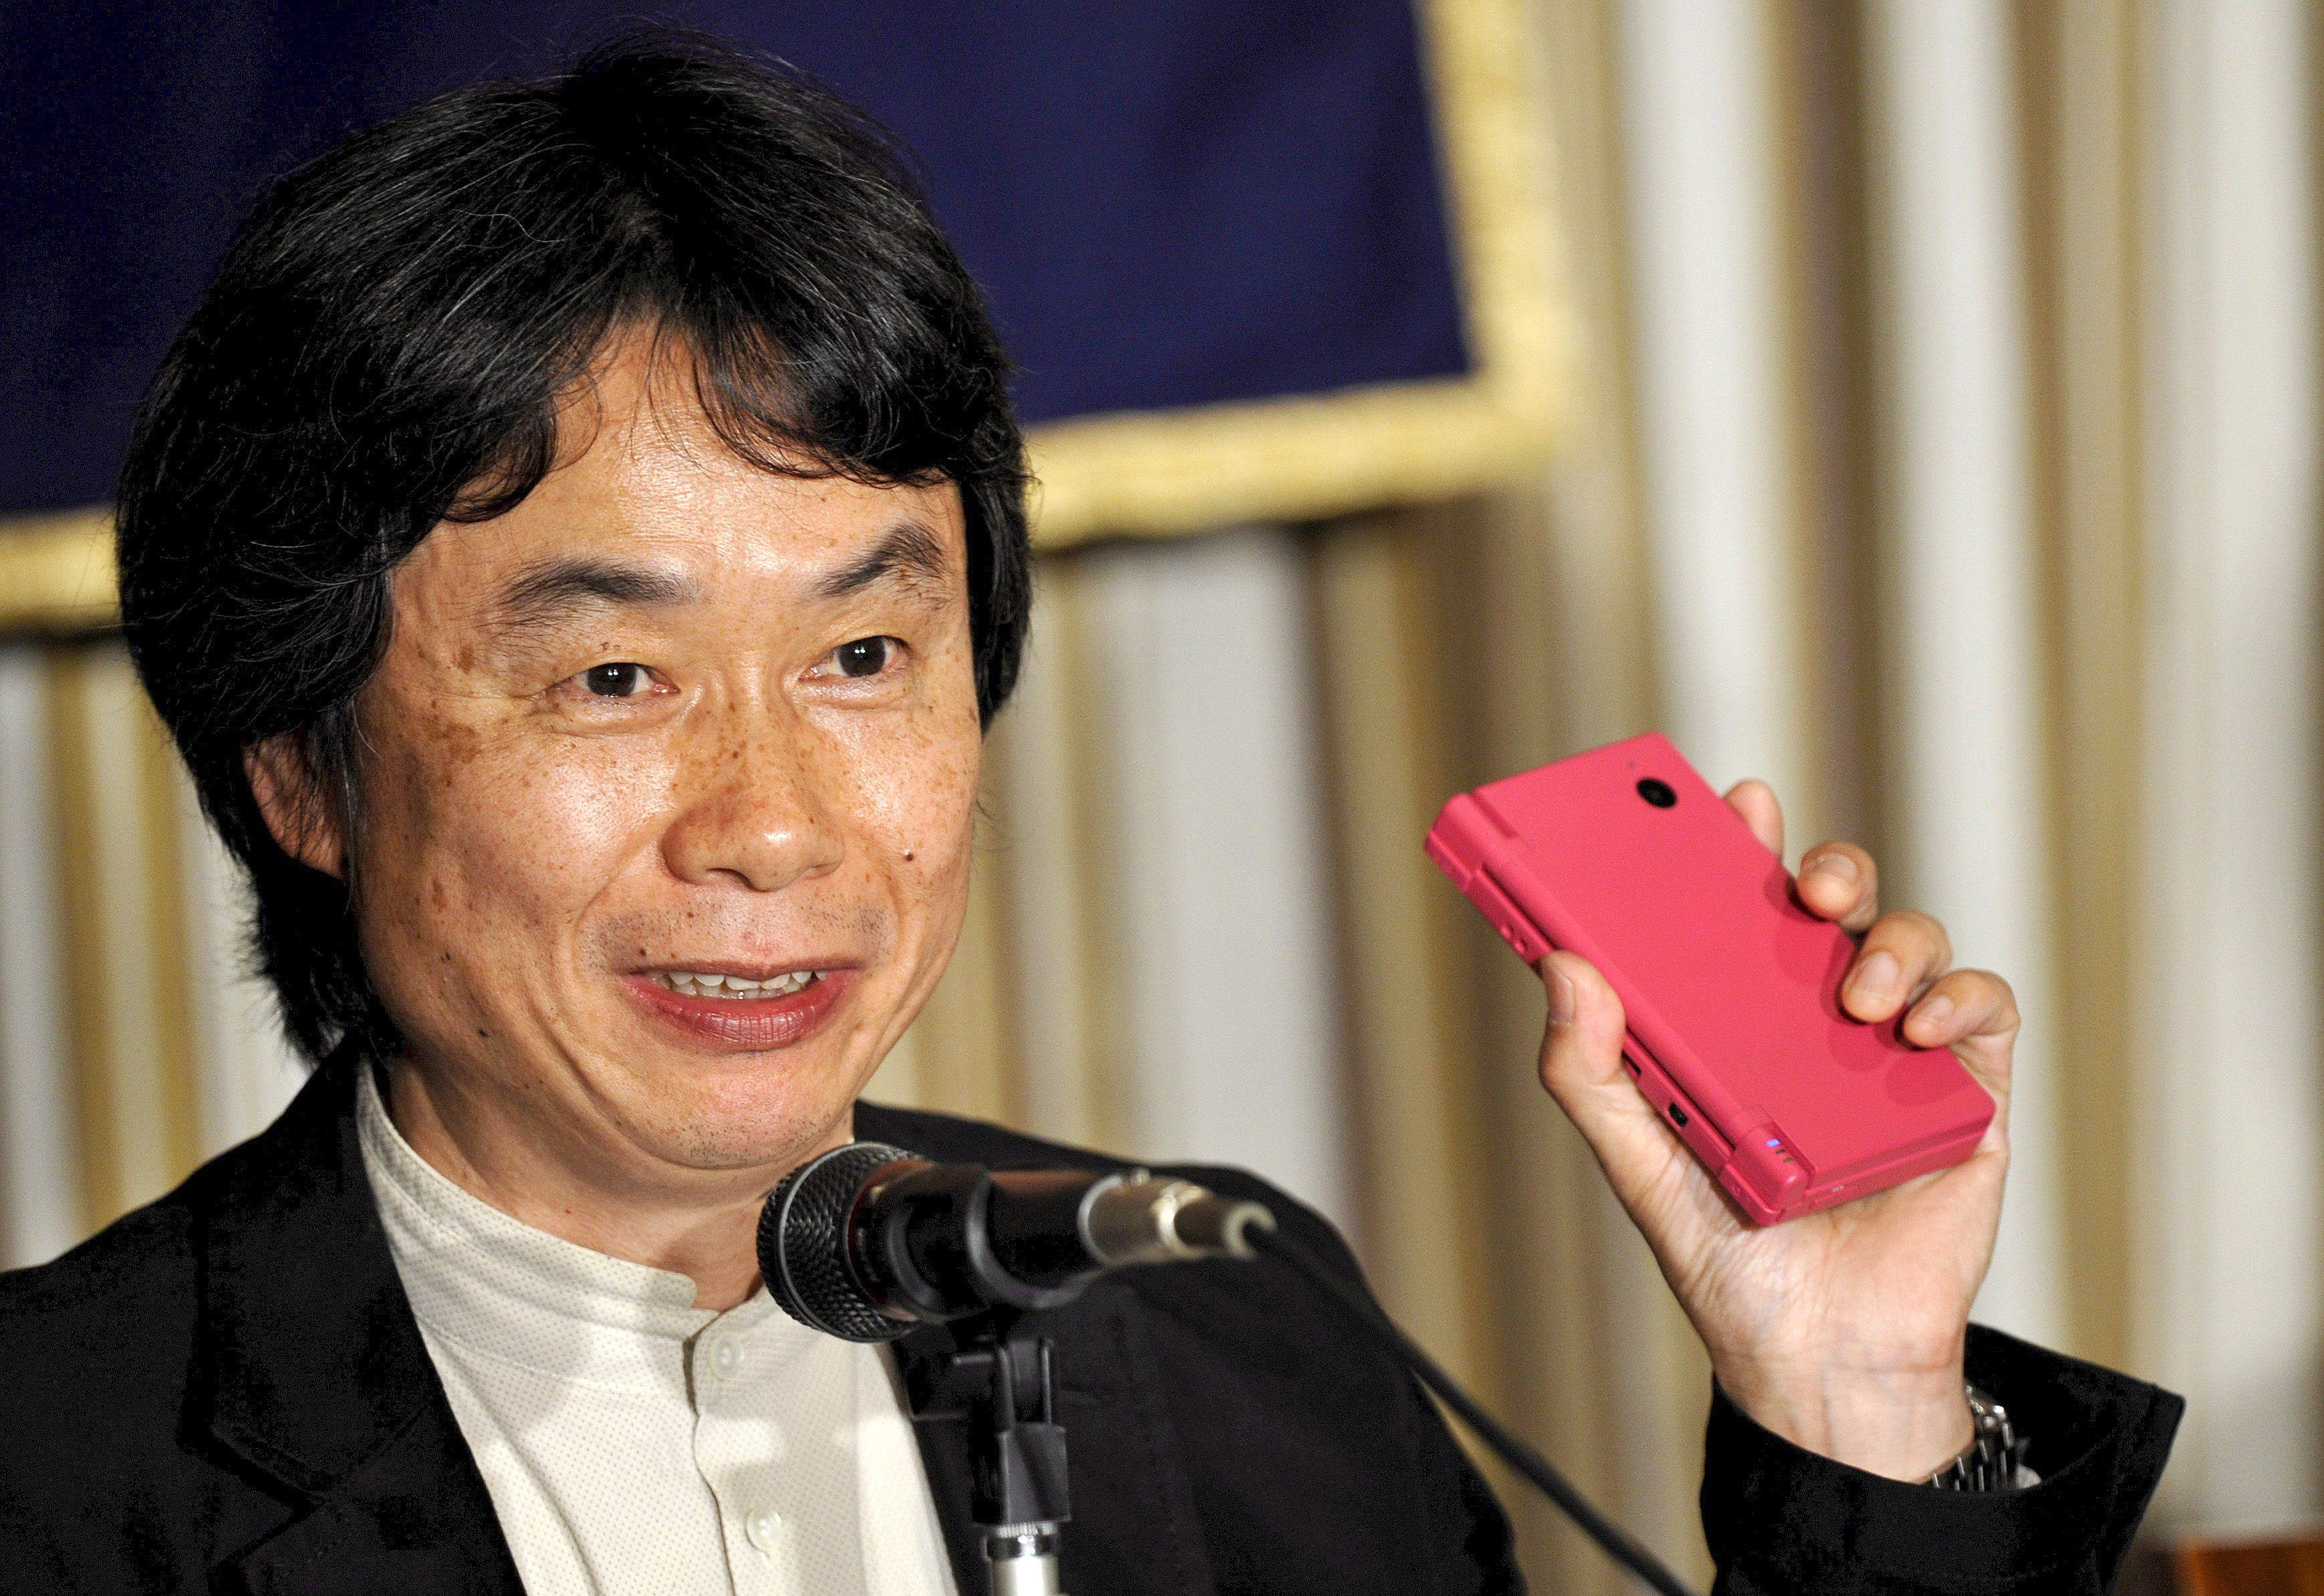 Men Shigeru Miyamoto HD Wallpaper | Background Image